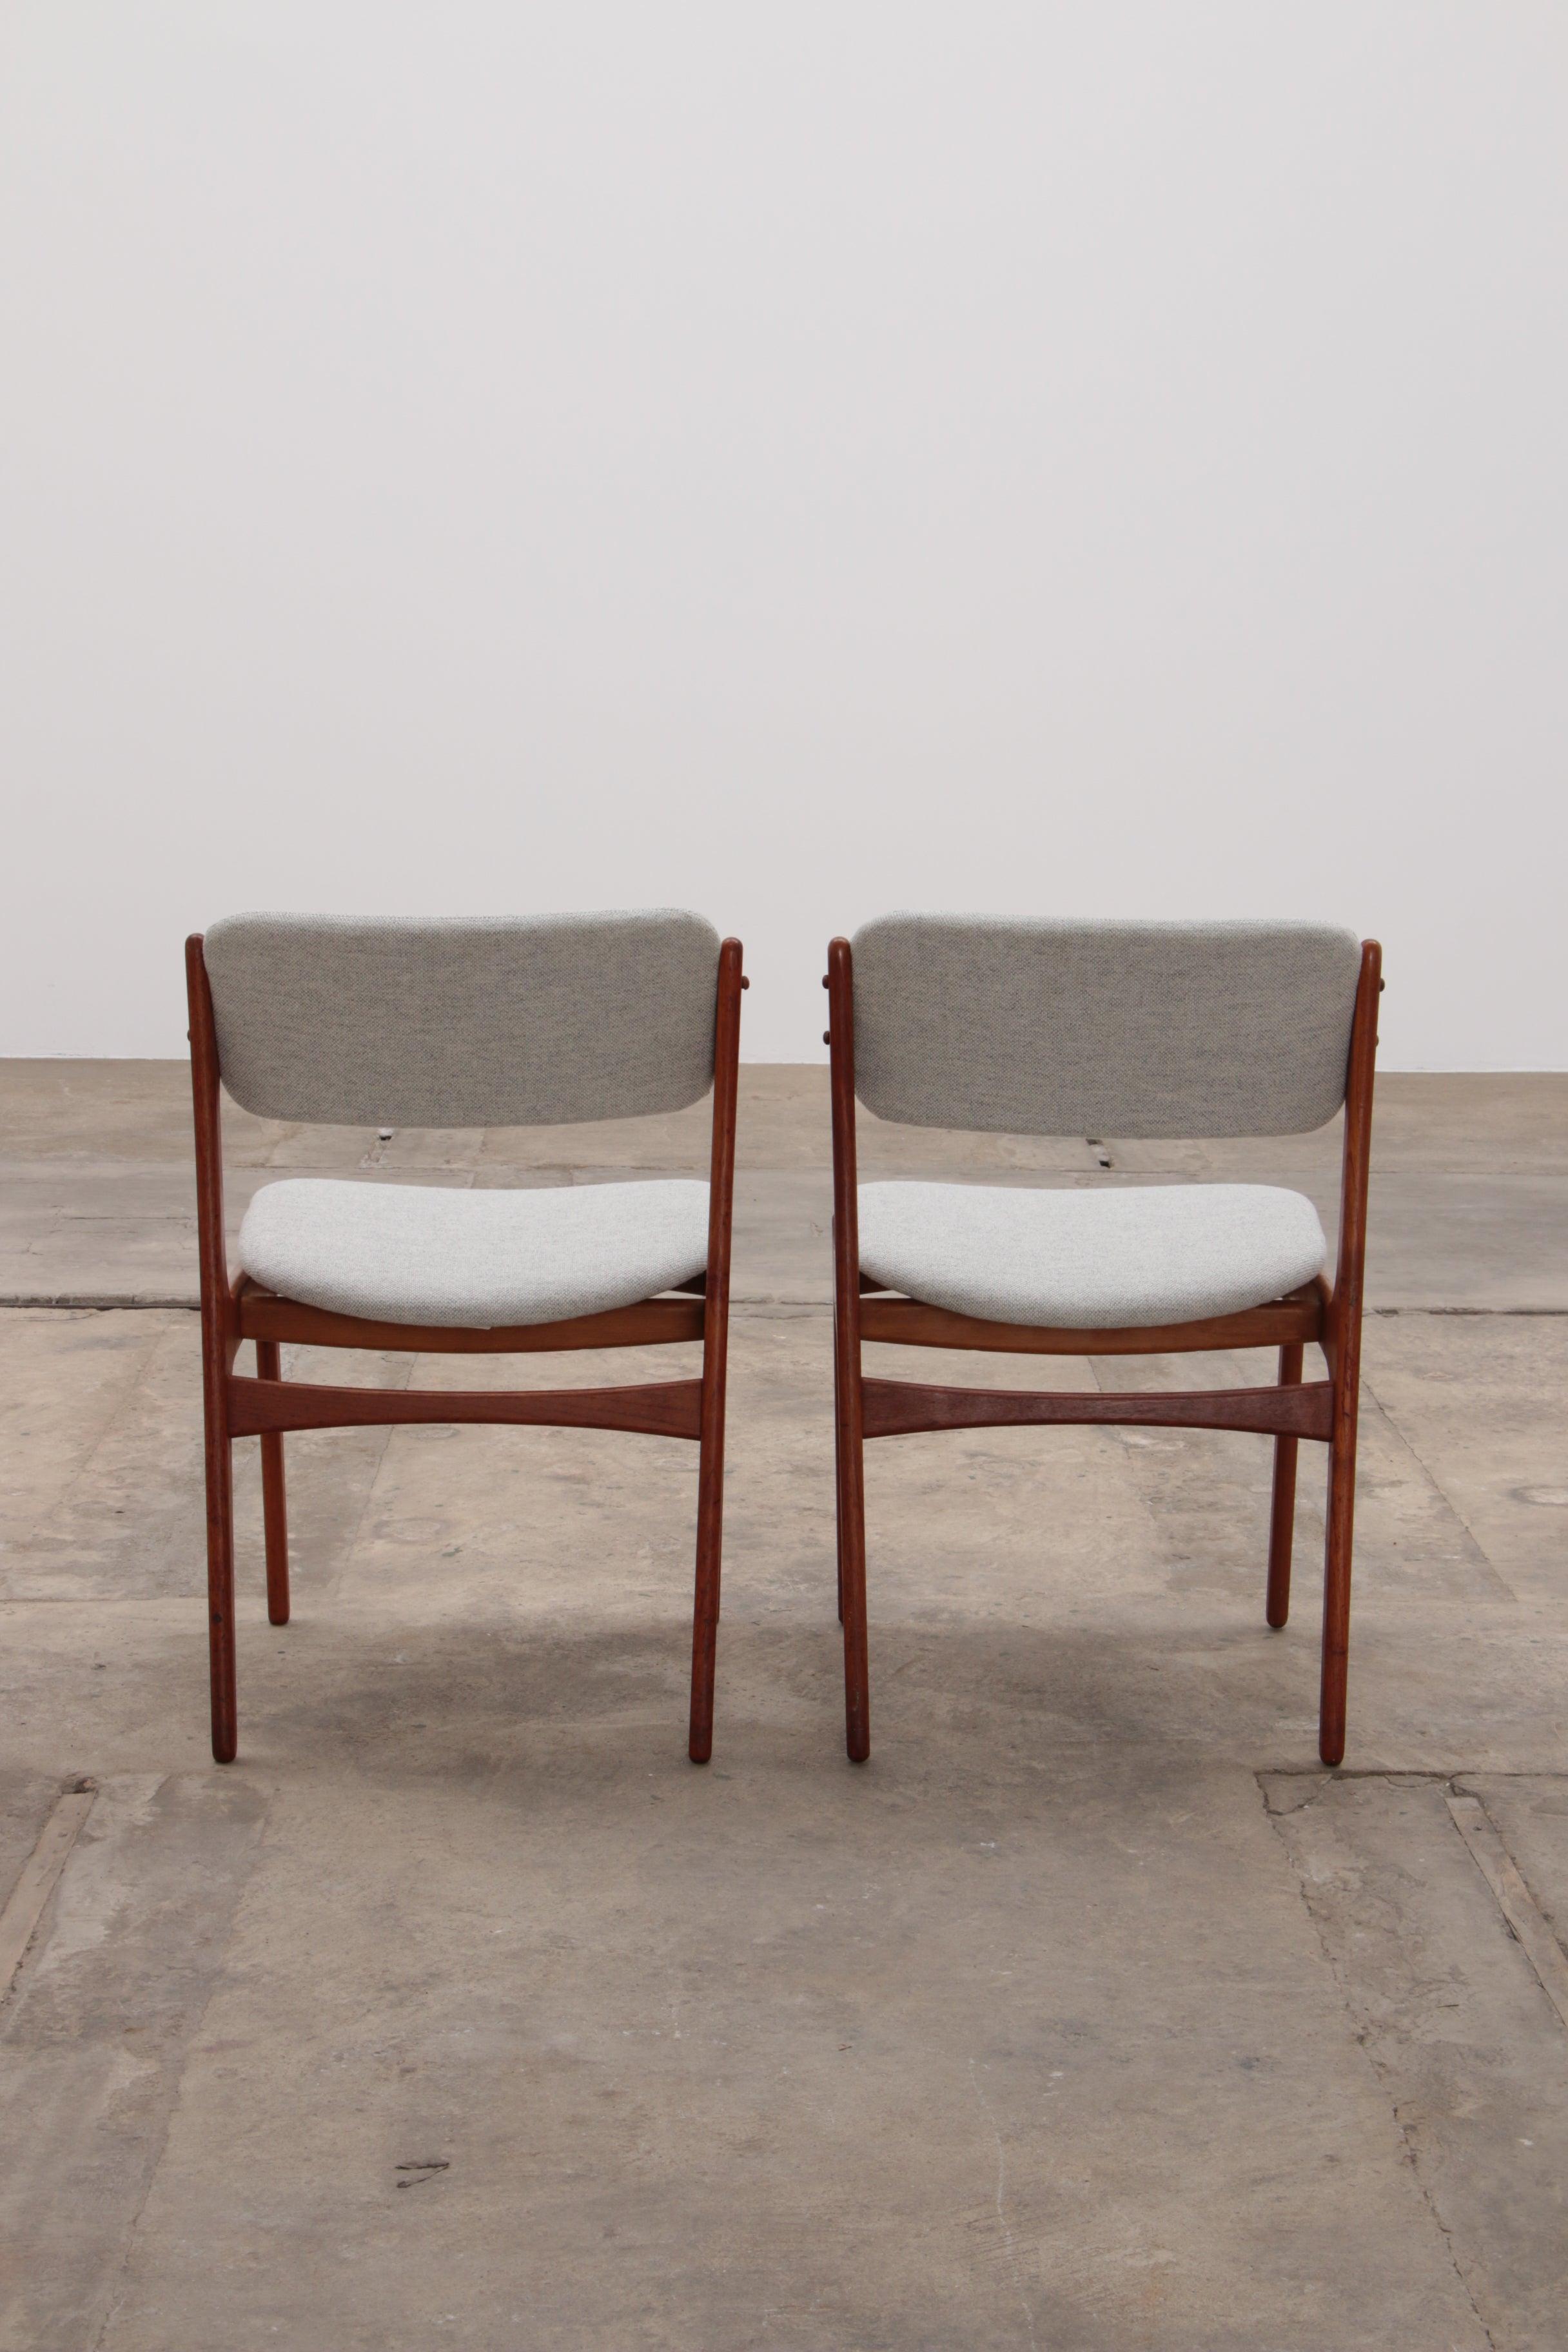 Fabric Vintage Teak Chairs Erik Buch Model 49 - Set of 2